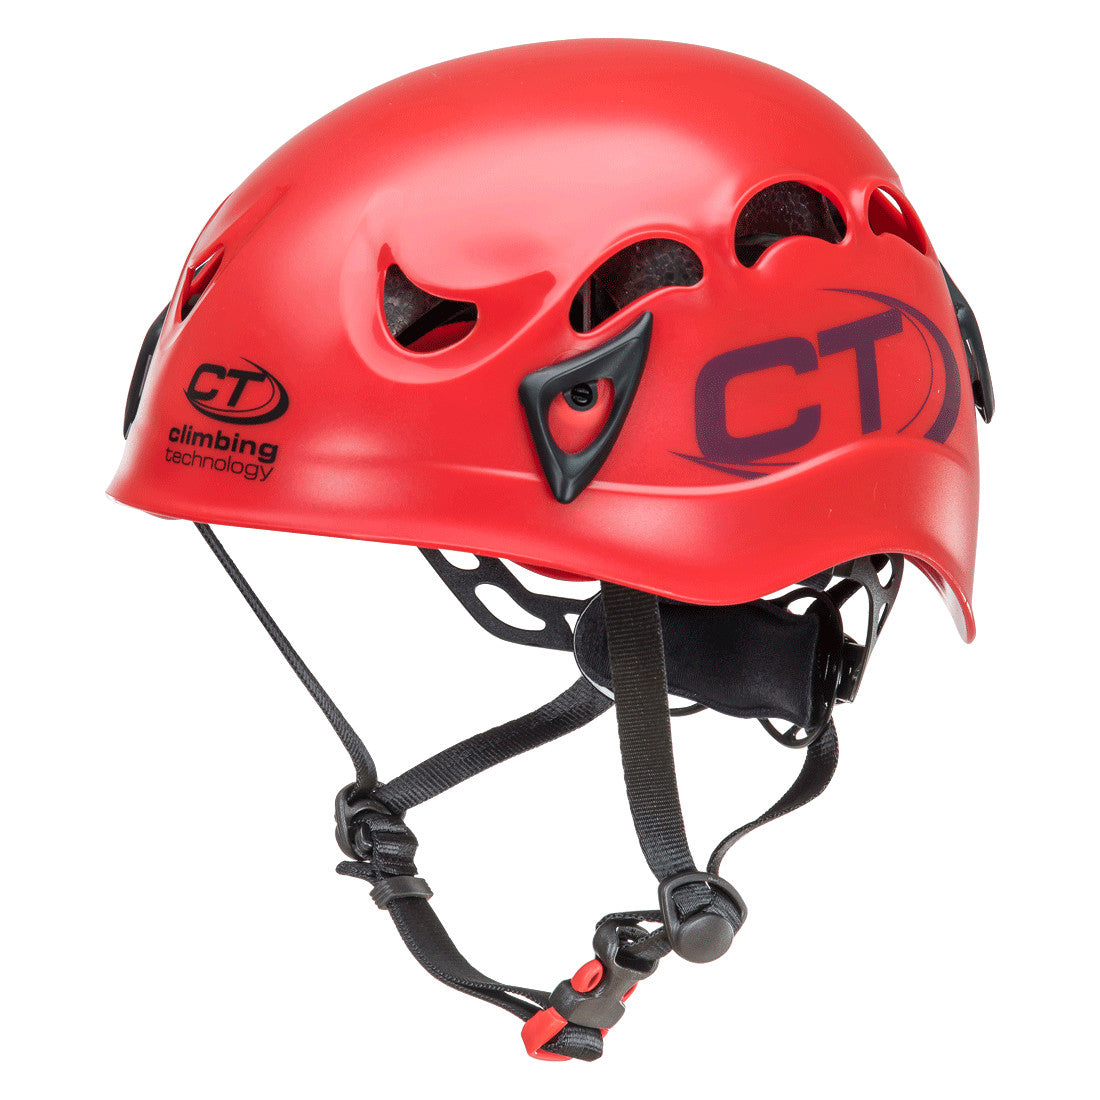 Climbing Technology Galaxy climbing helmet, in red colour